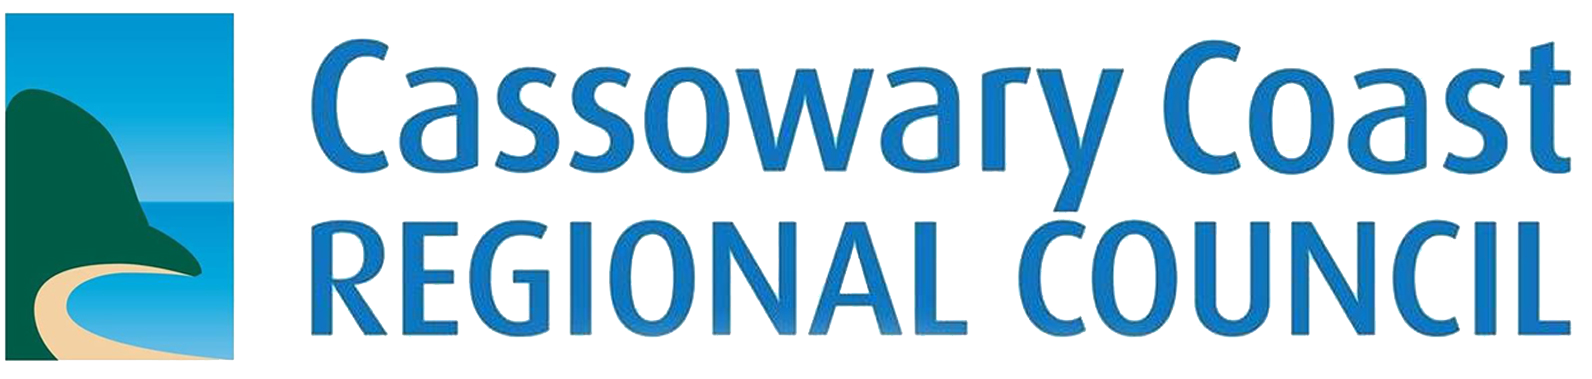 Logo for Cassowary Coast Regional Council